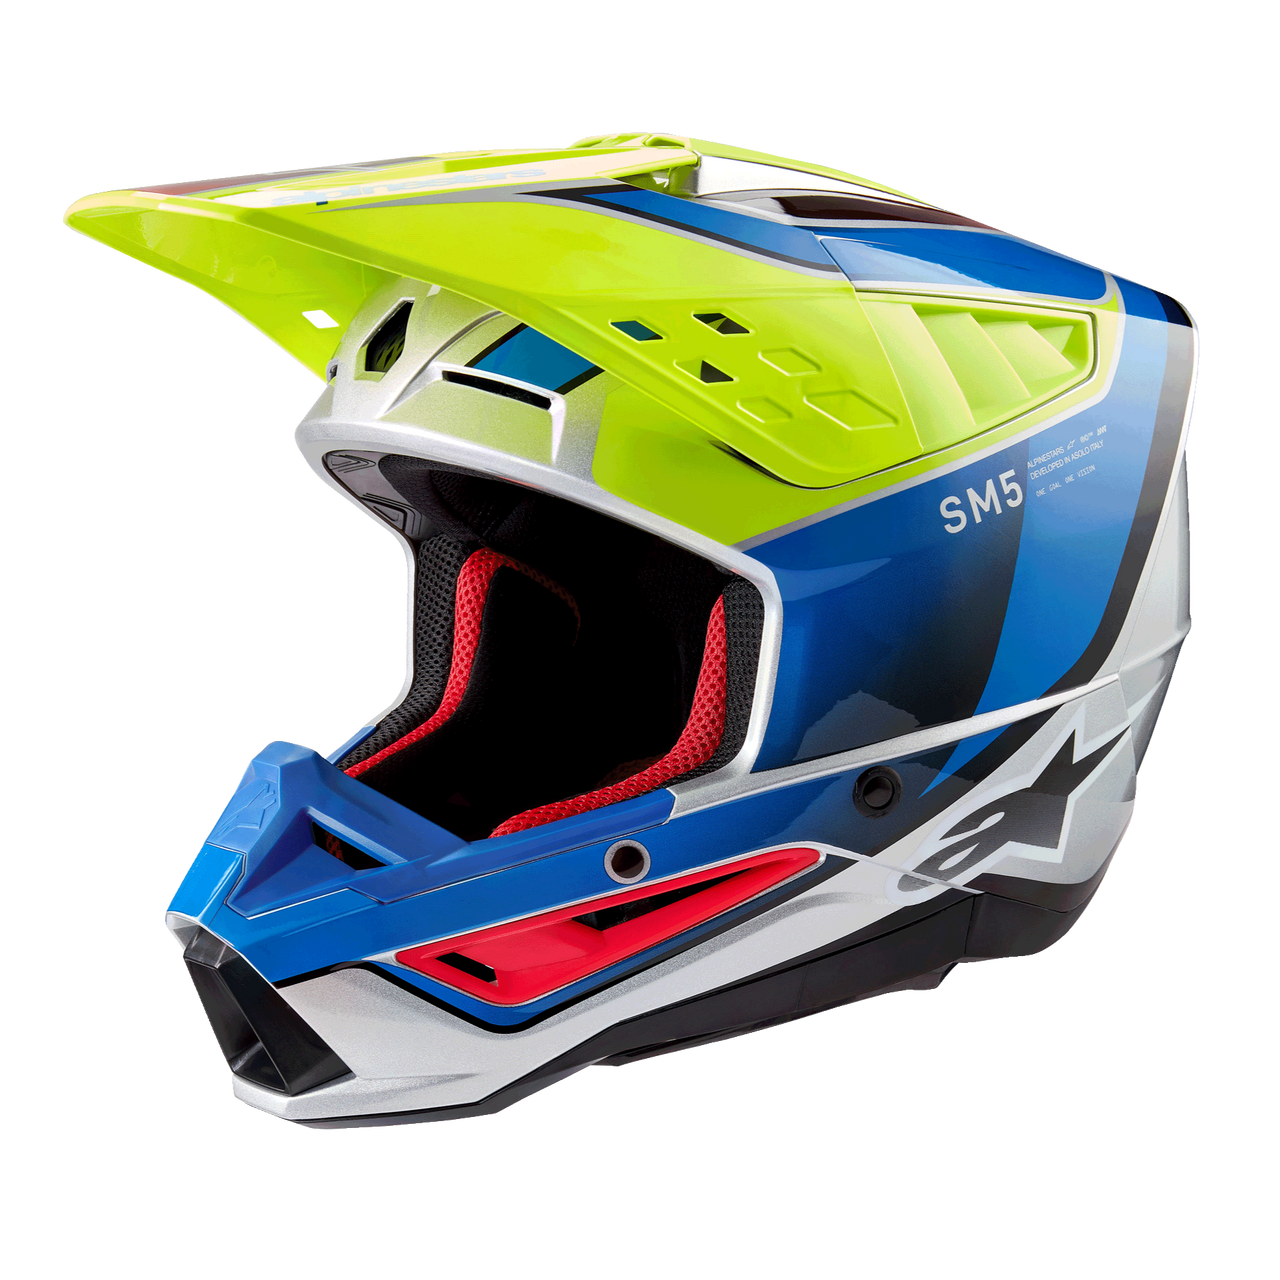 MX24 SM5 Helmets